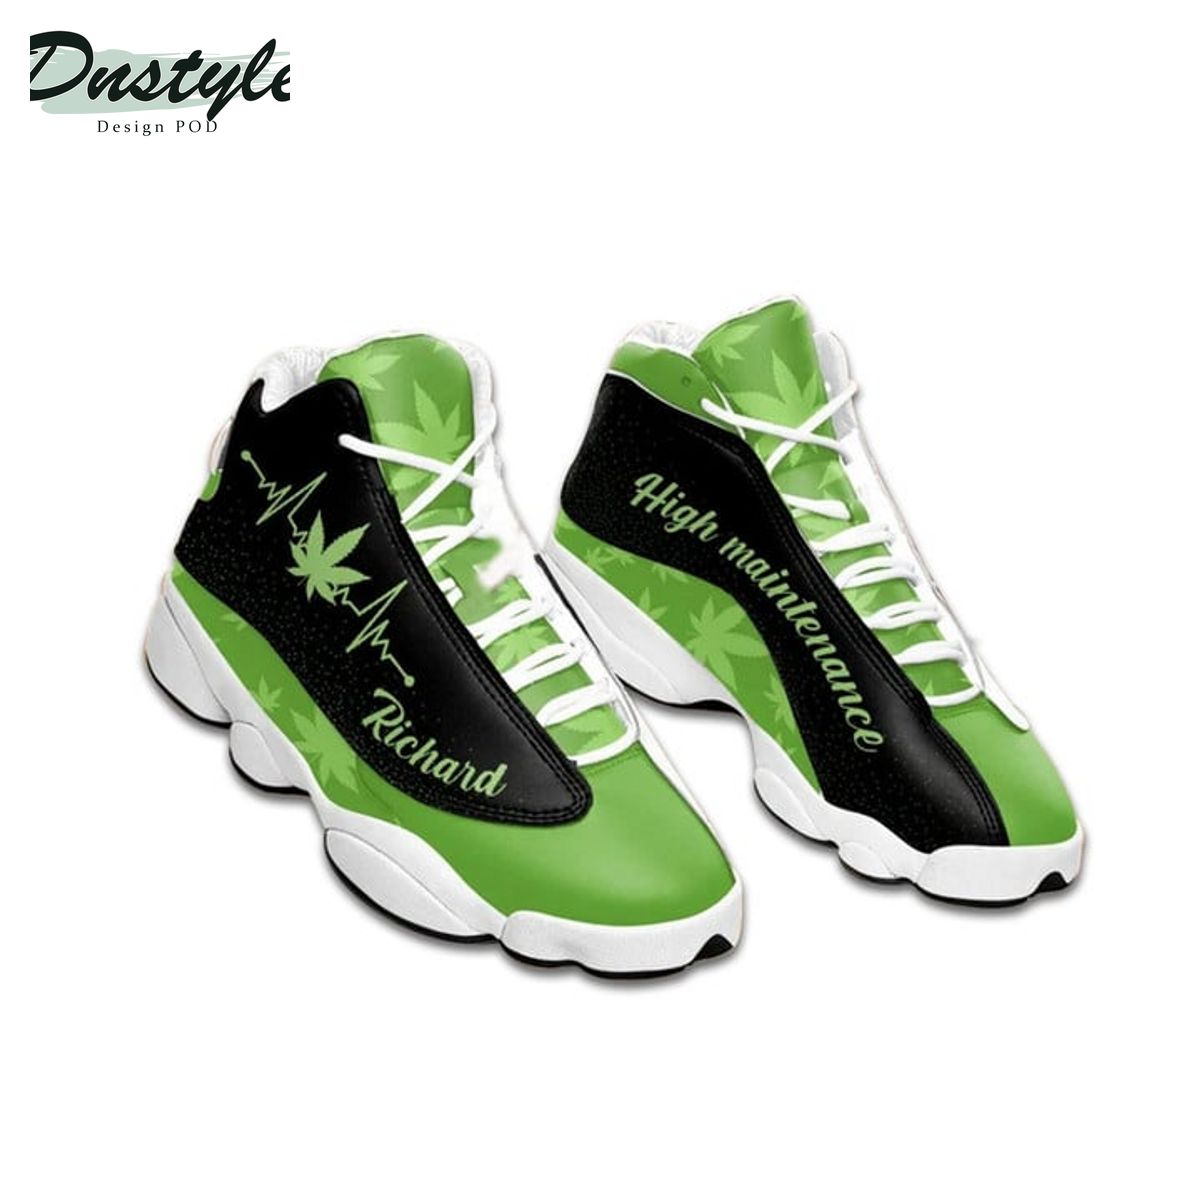 Weed high maintenance black and green custom name air jordan 13 shoes